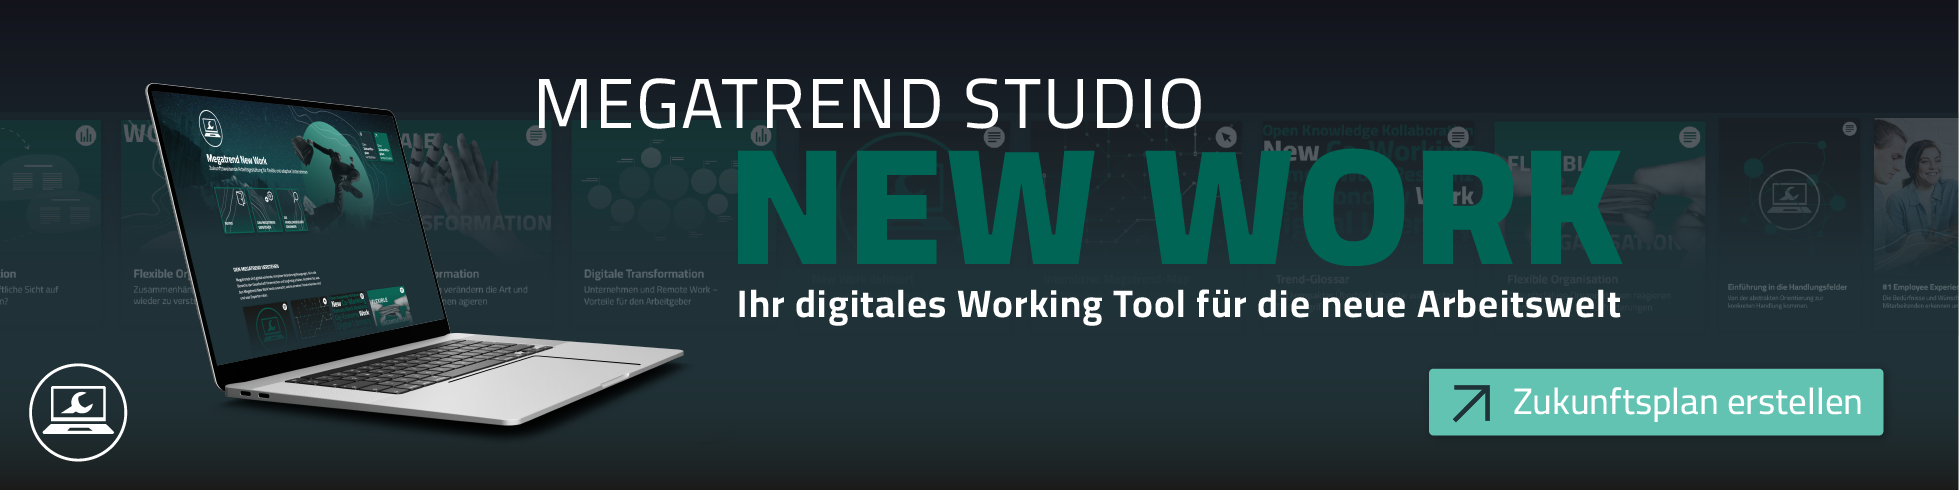 Megatrend_Studio_New_Work